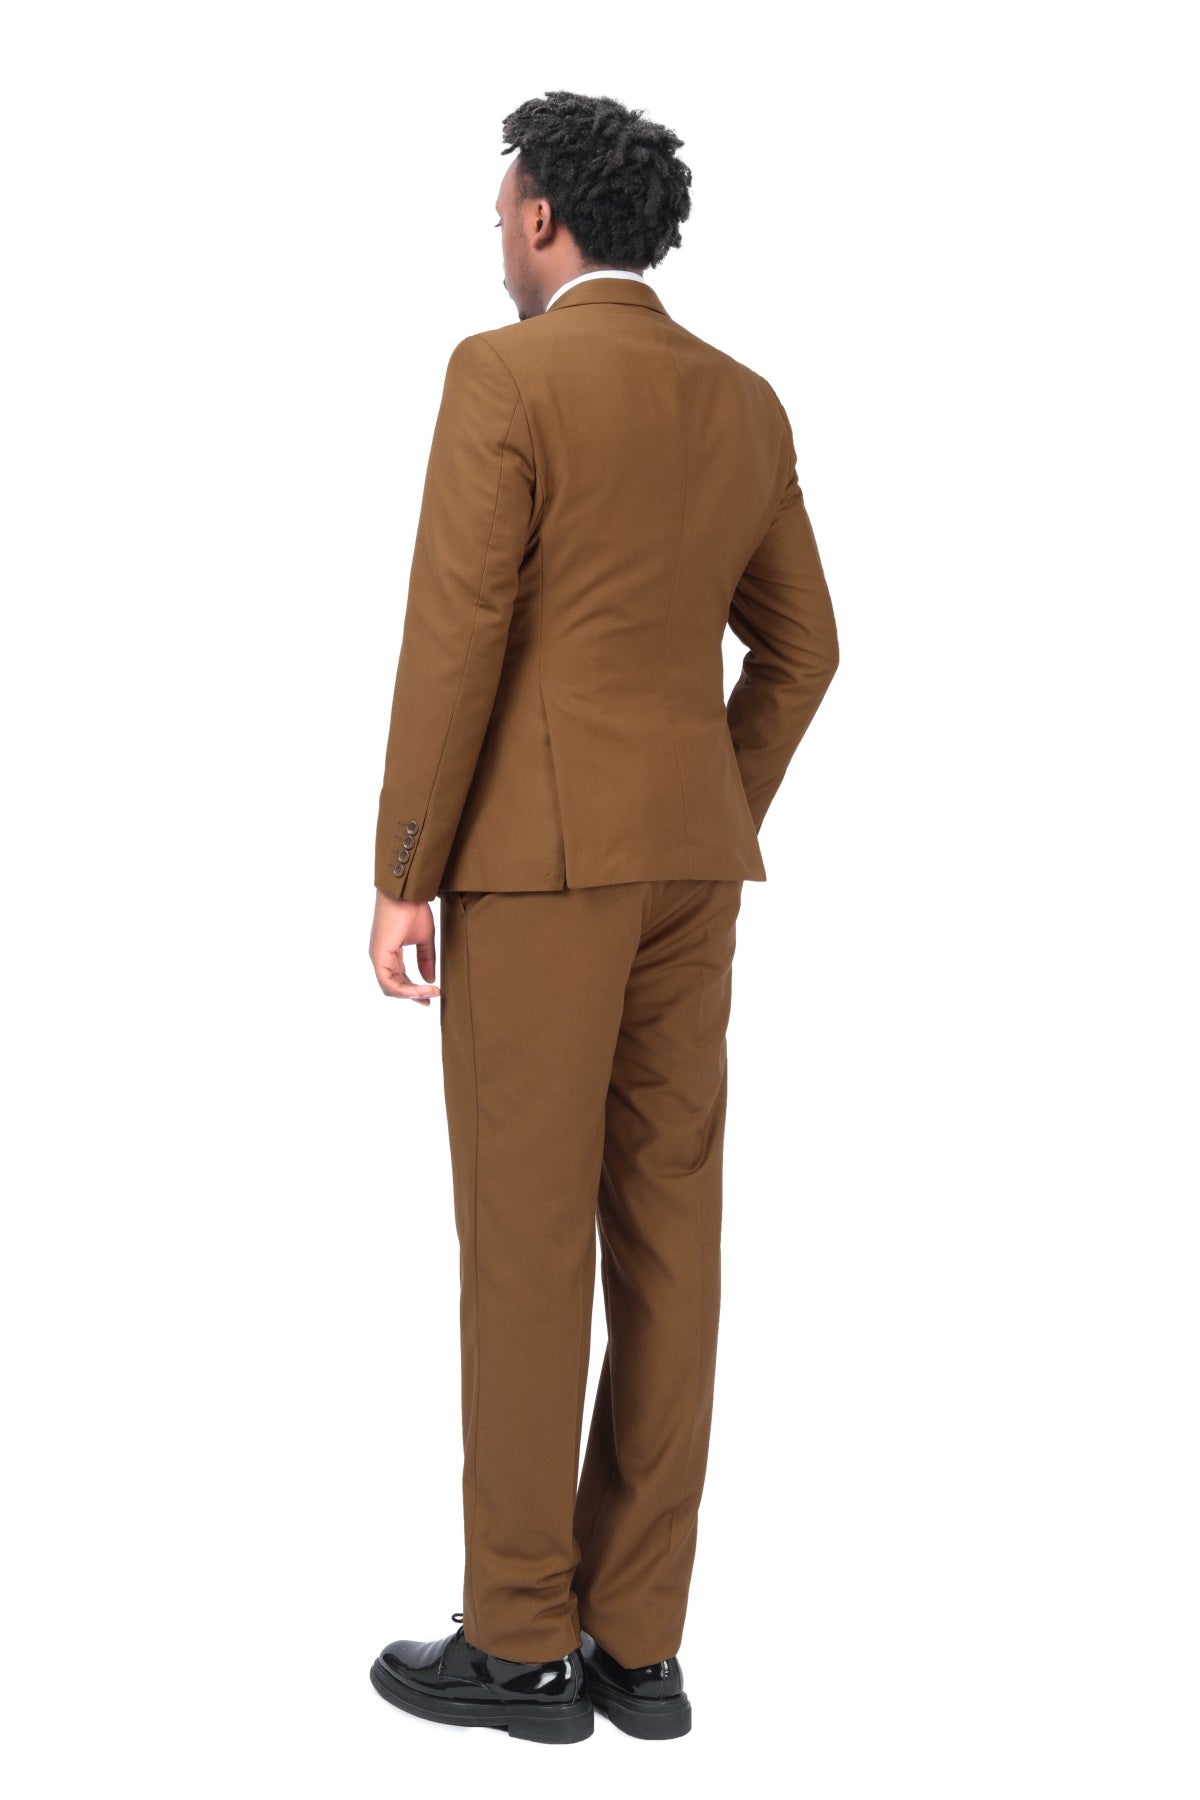 3-Piece One Button Formal Suit Light Coffee Suit